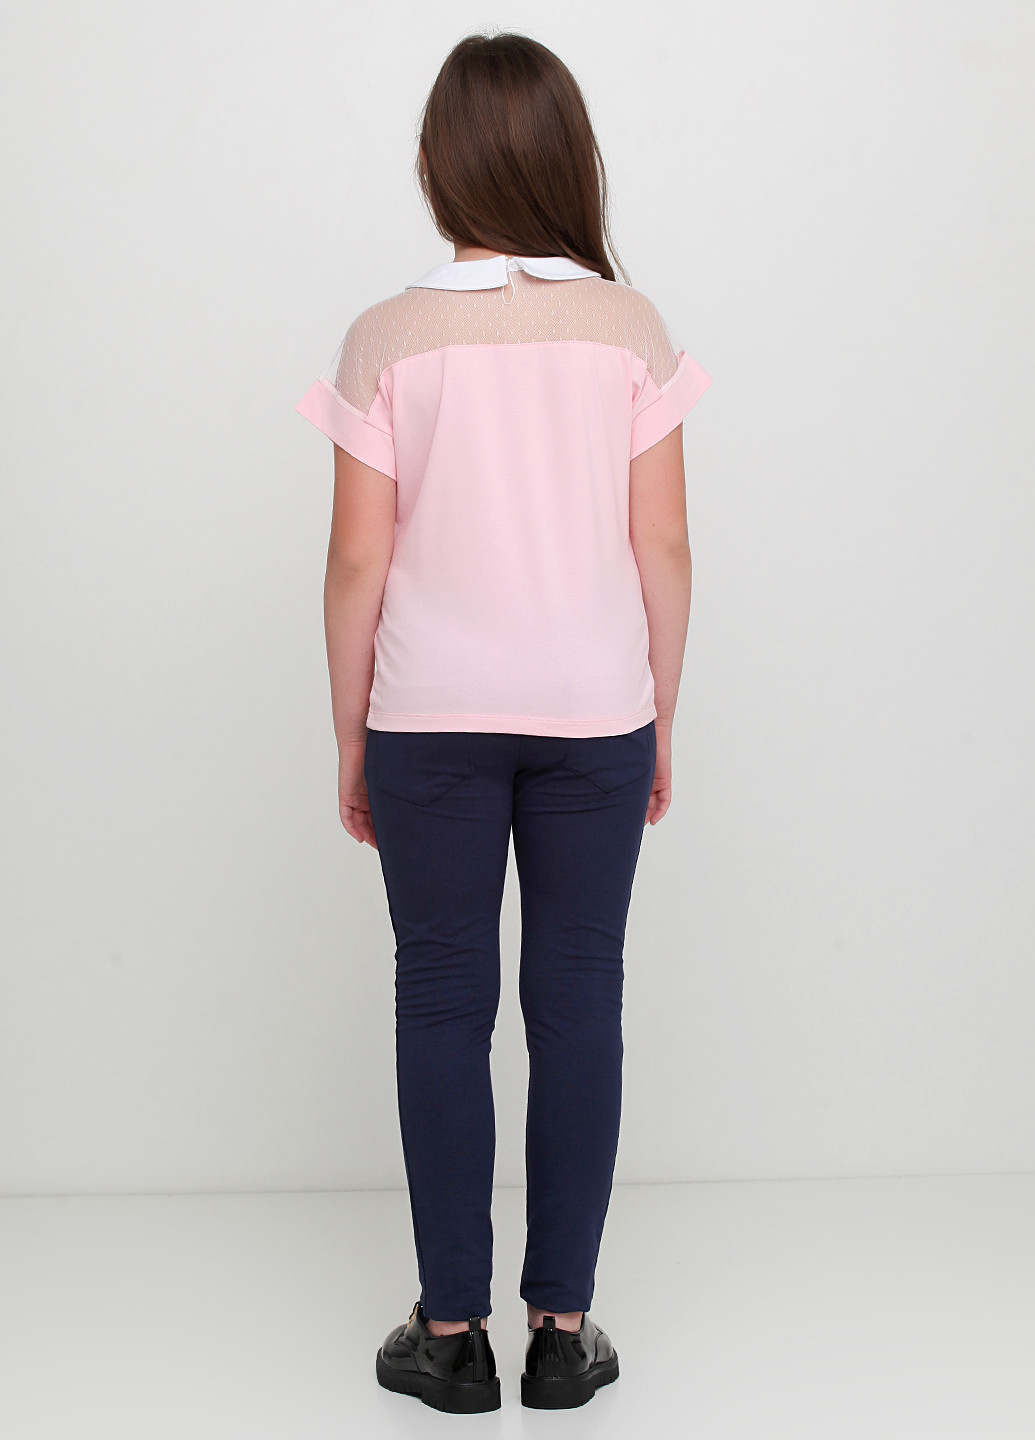 Розовая блузка Vidoli летняя